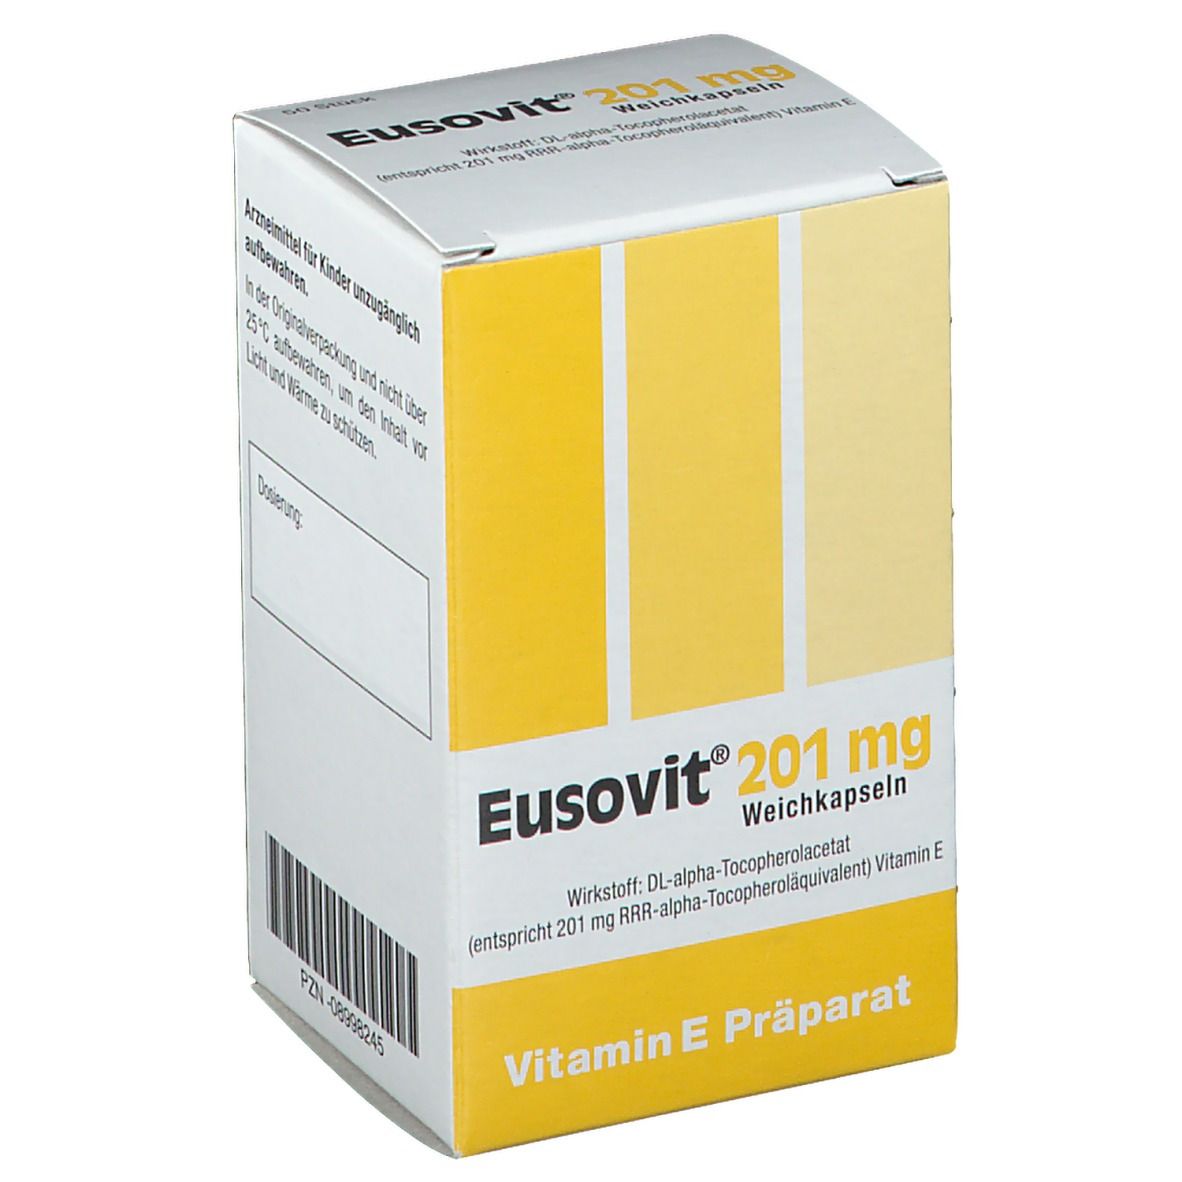 Eusovit® 201 mg